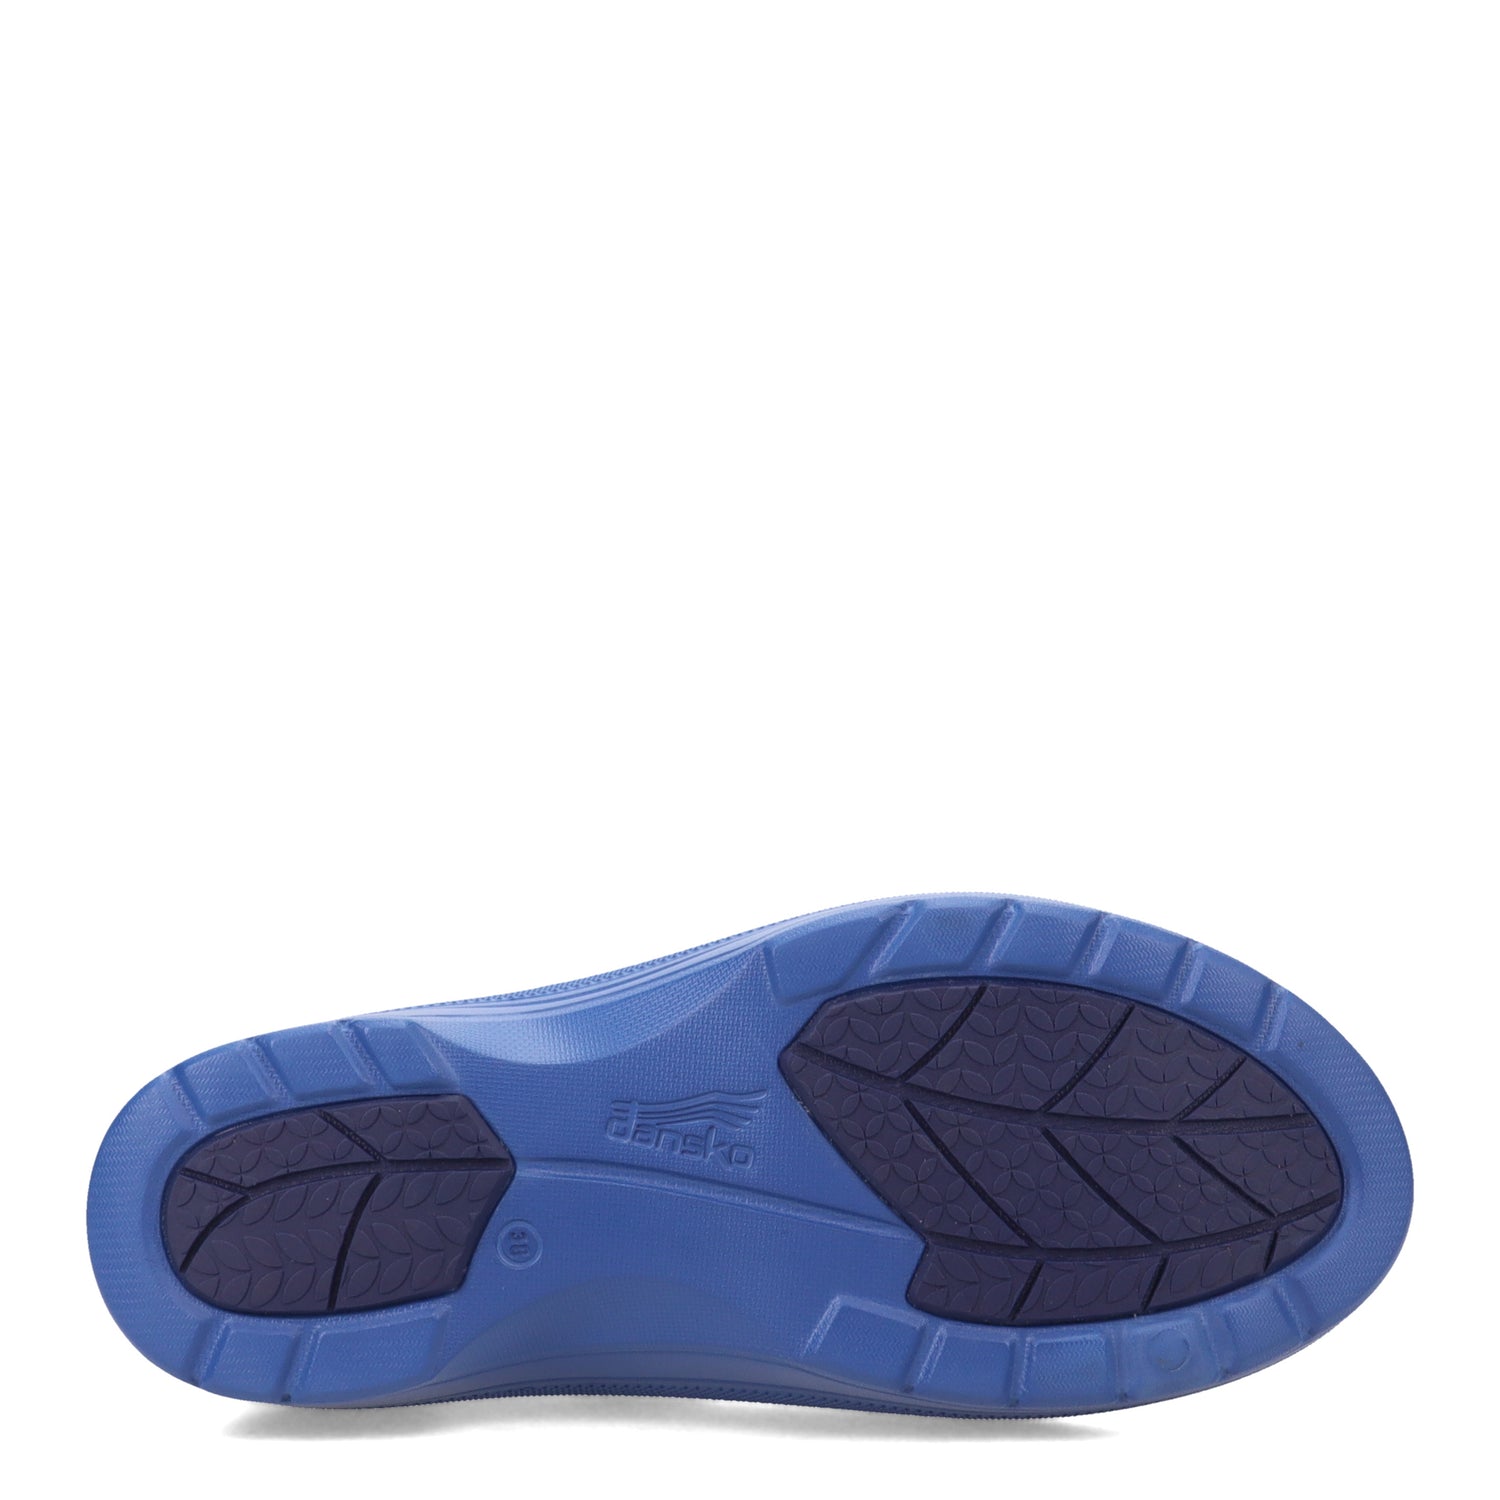 Peltz Shoes  Women's Dansko Karmel Rain Boot Blue 4055-755400